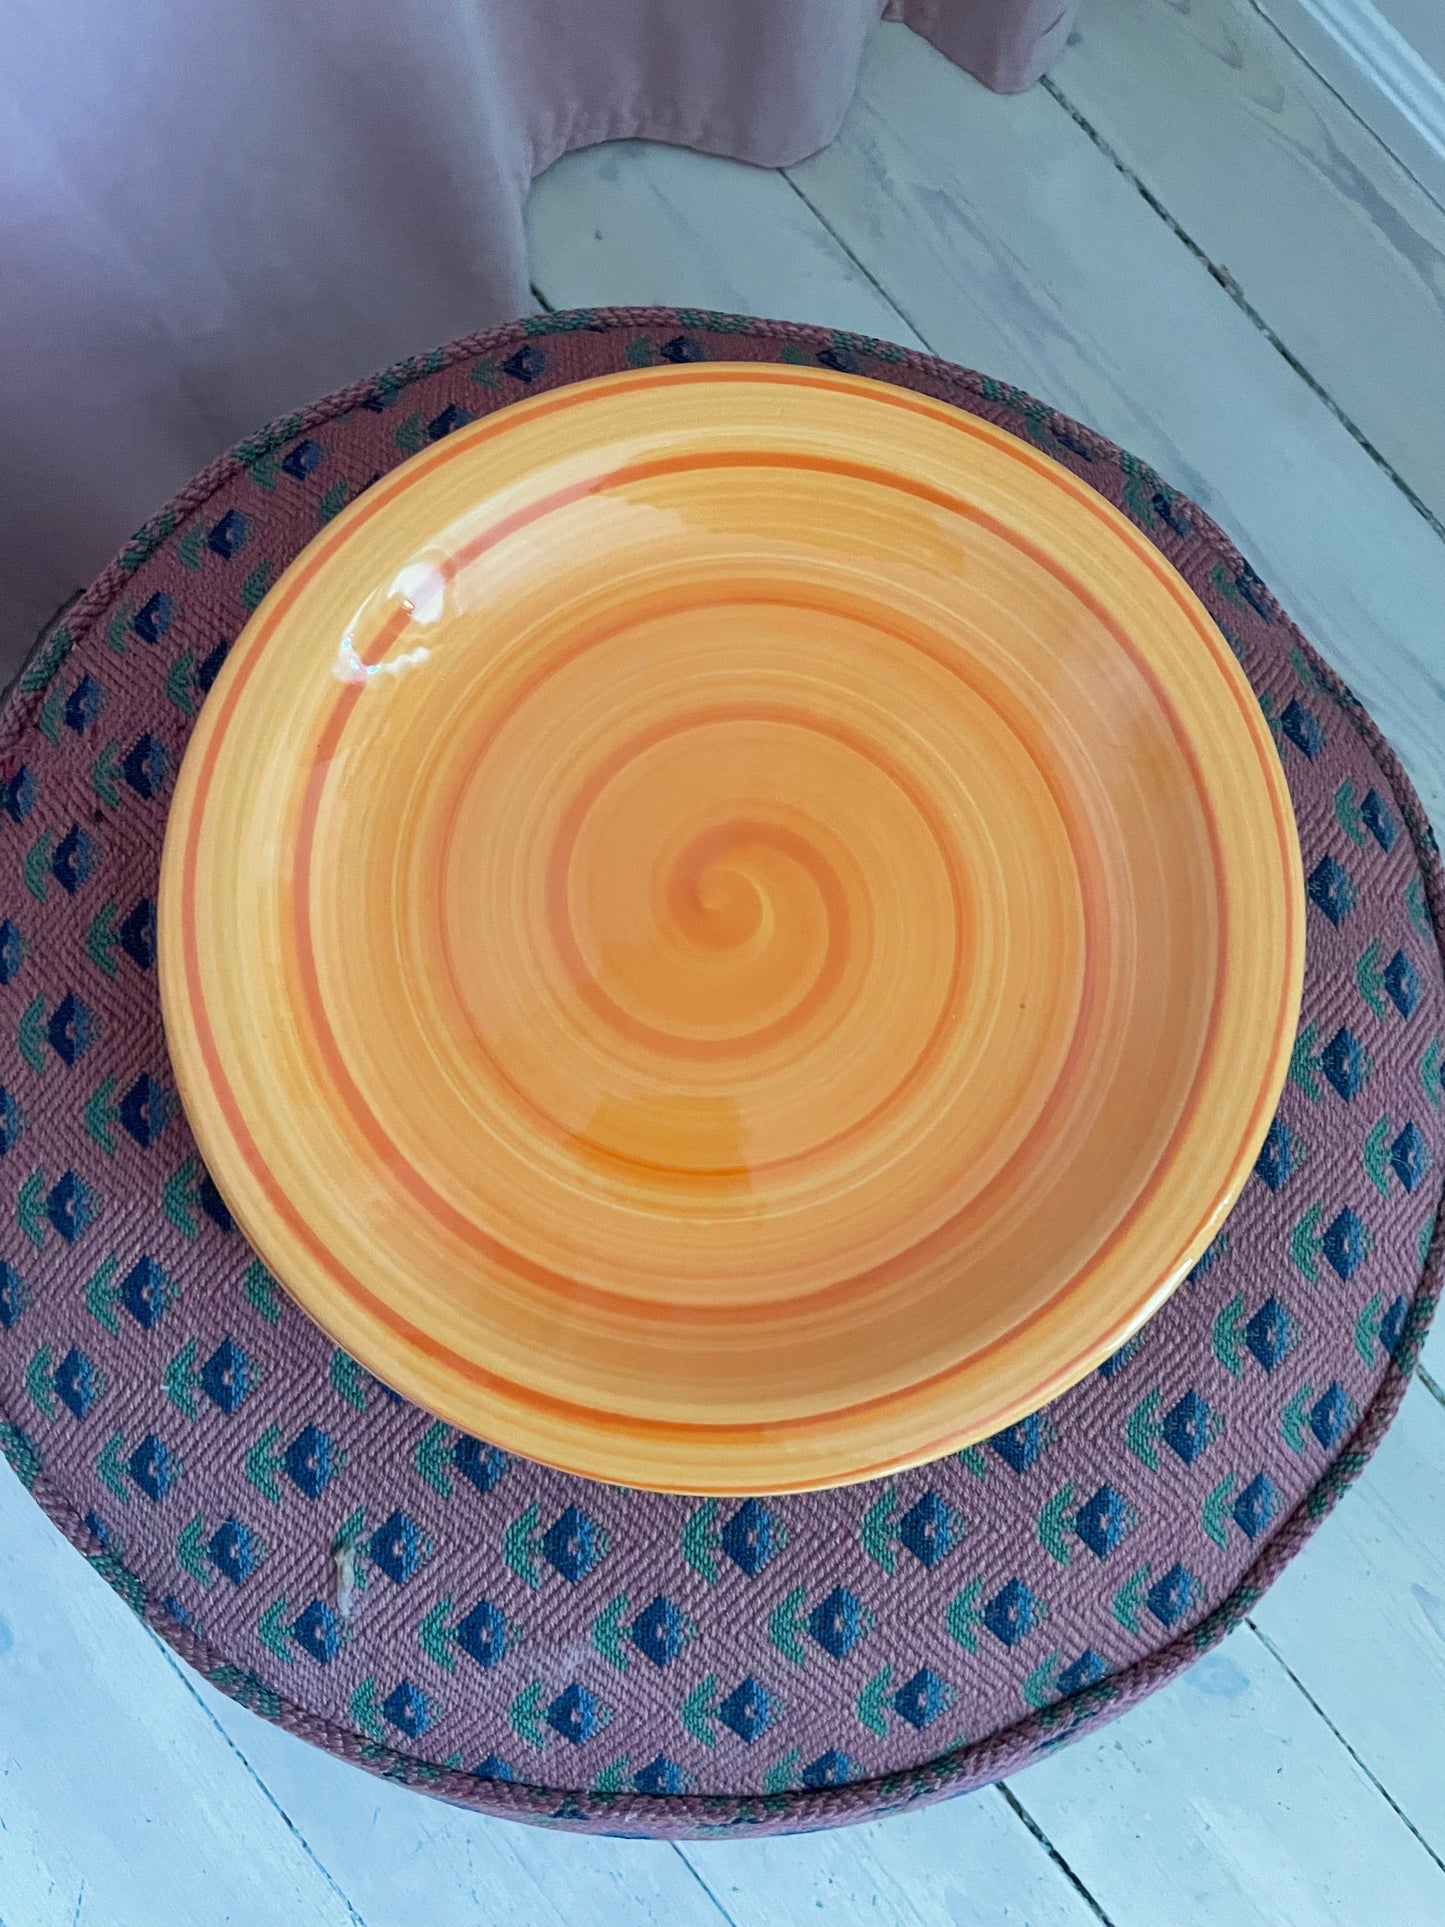 Orange dinner plates with swirl